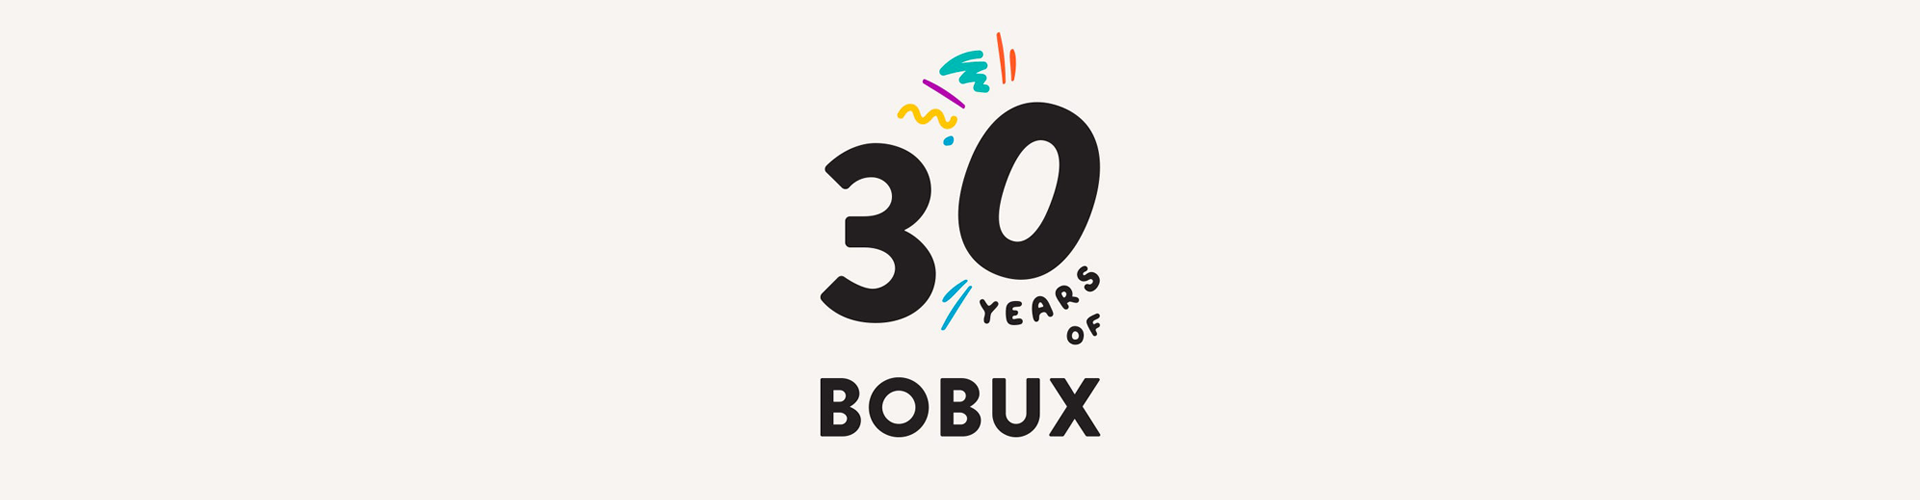 30 anni di Bobux